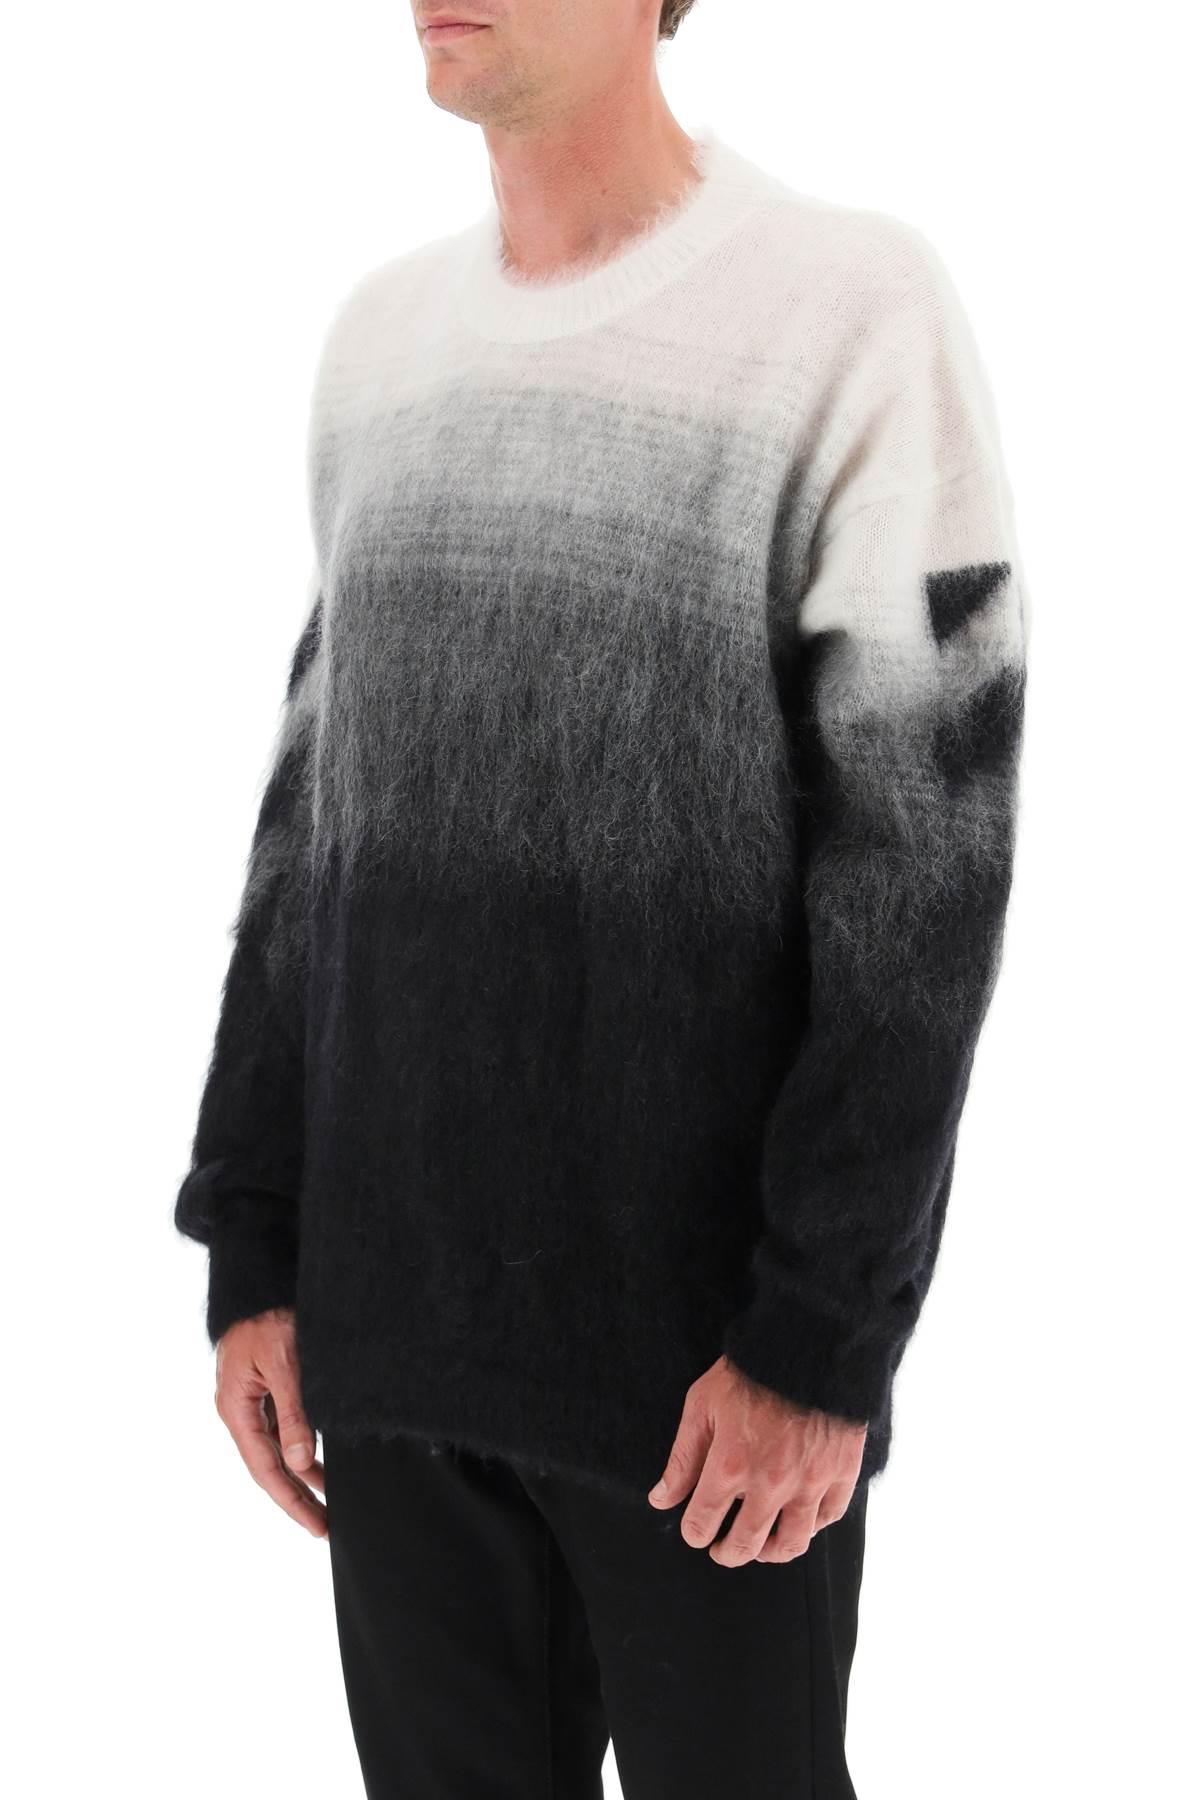 Off-White c/o Virgil Abloh - Men's Monogram Motif Sweater Crew Neck